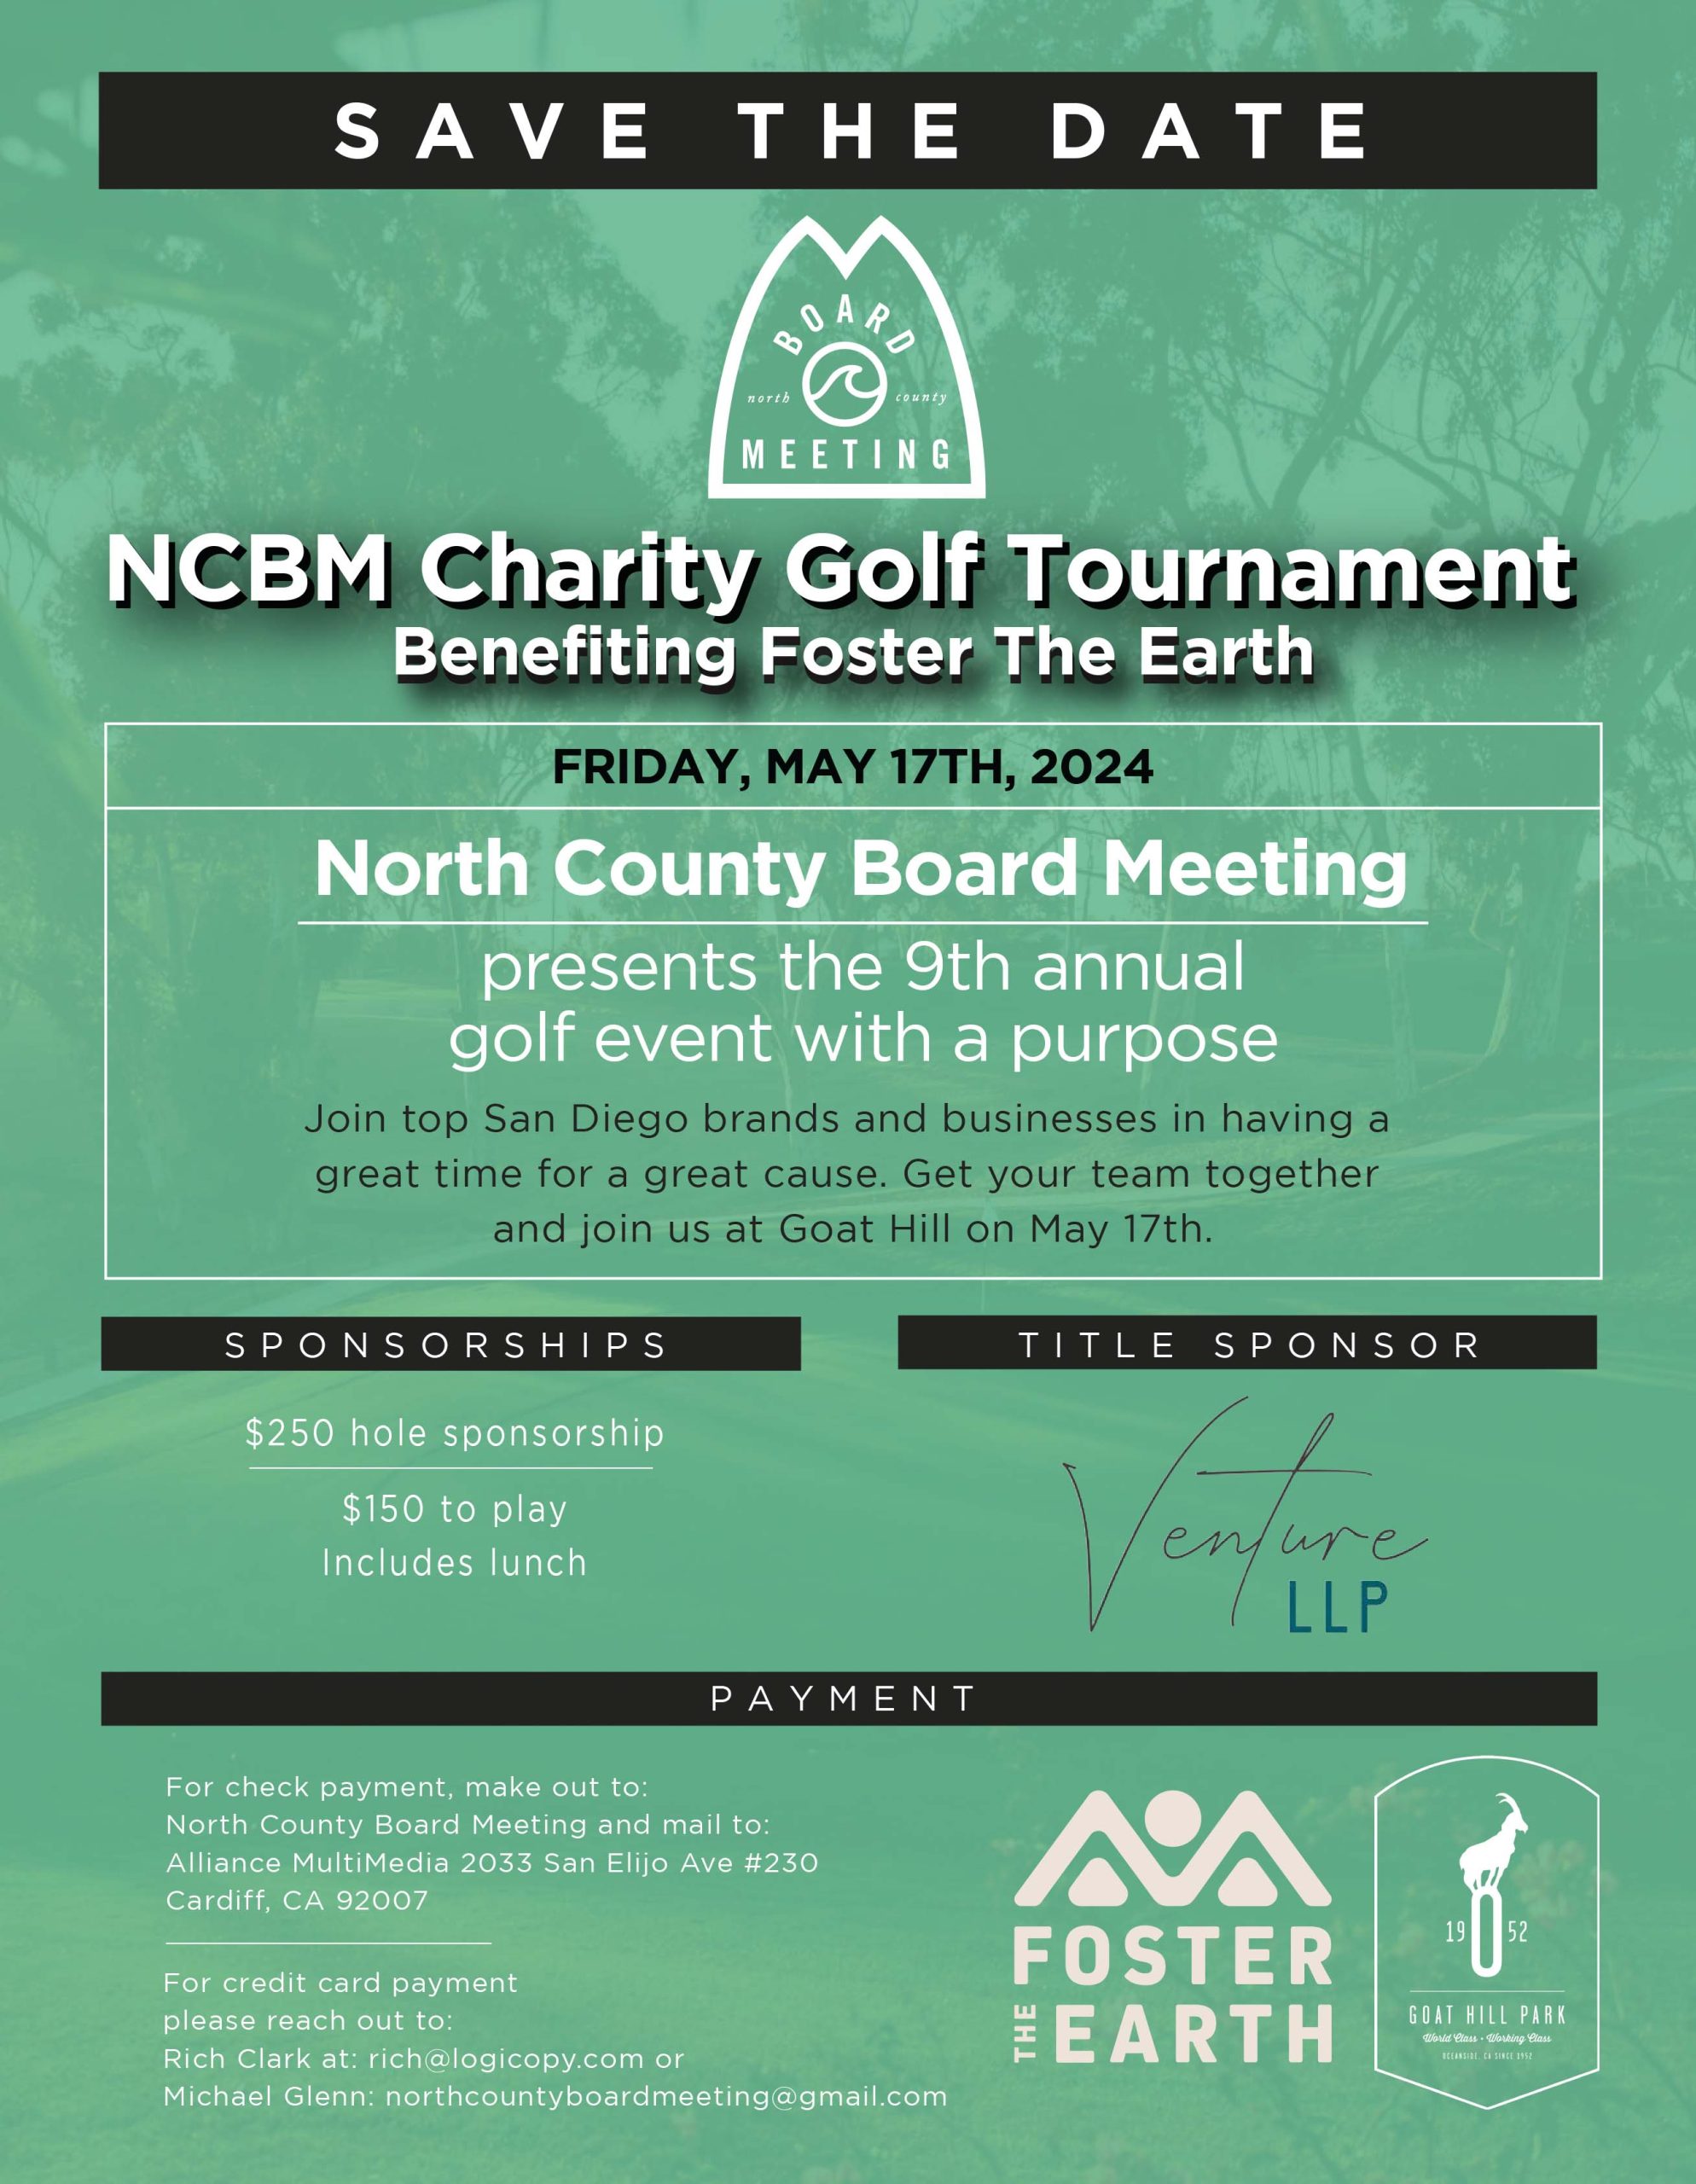 NCBM Charity Golf Tournament Flyer